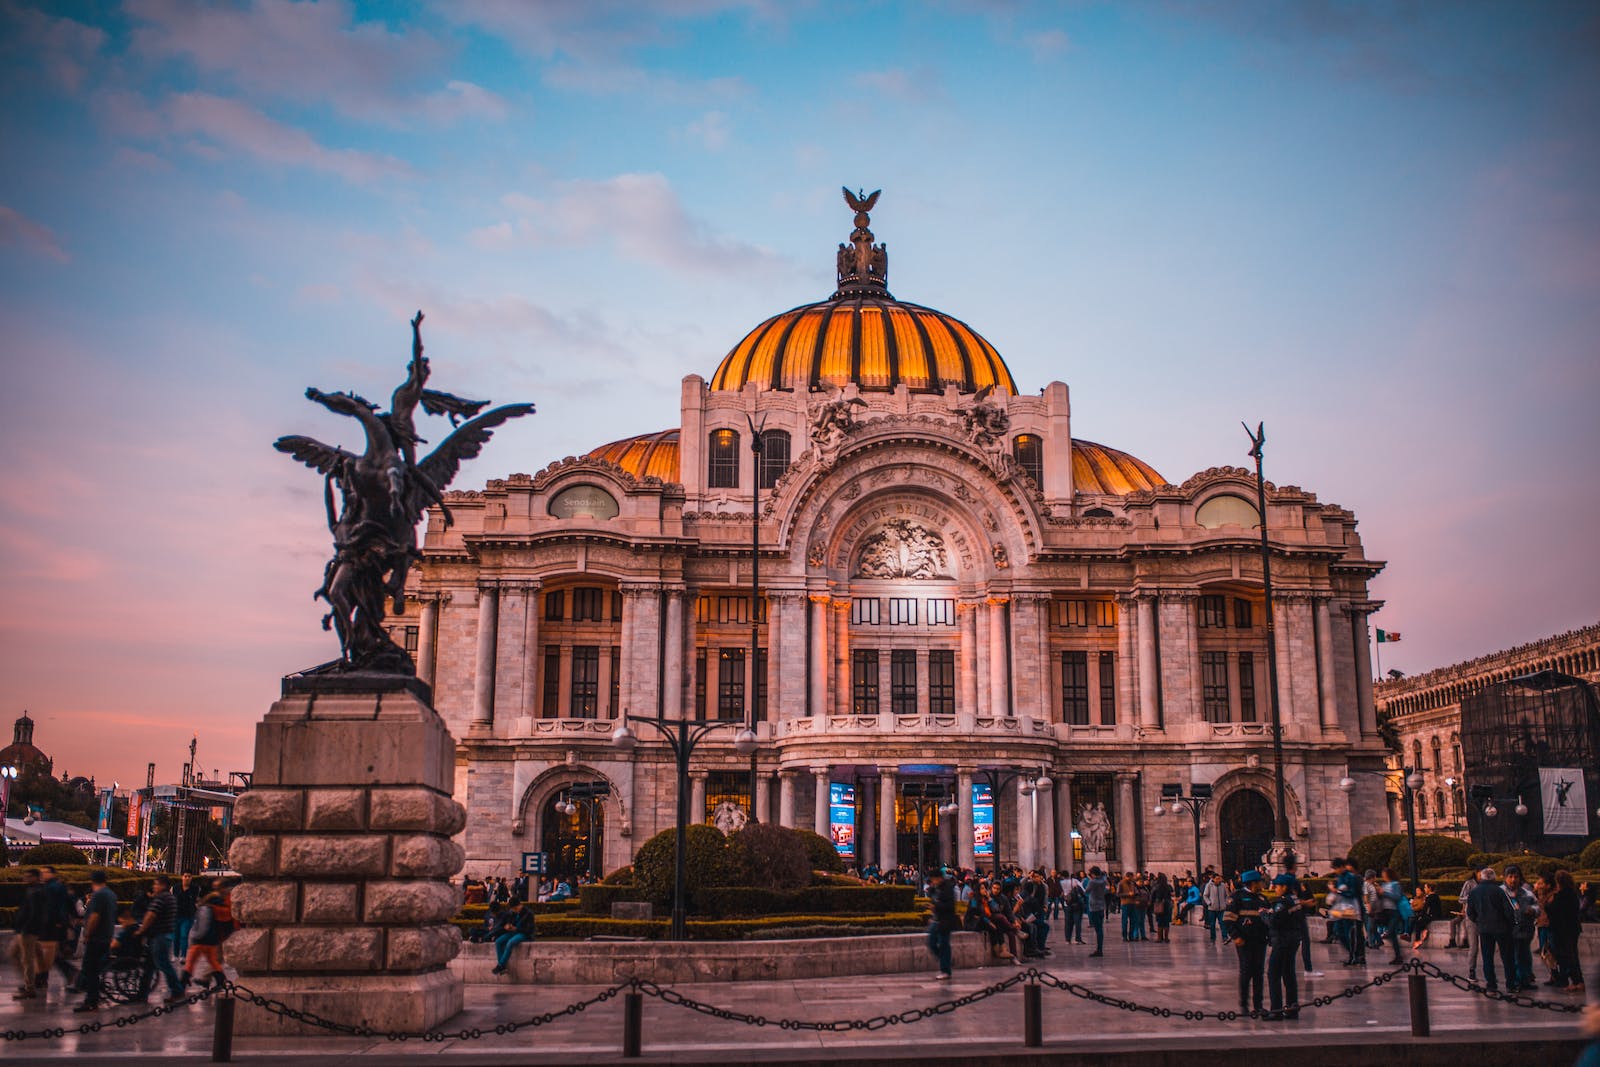 Zona Maco during Mexico City Art Week - Photo by Rafael Guajardo